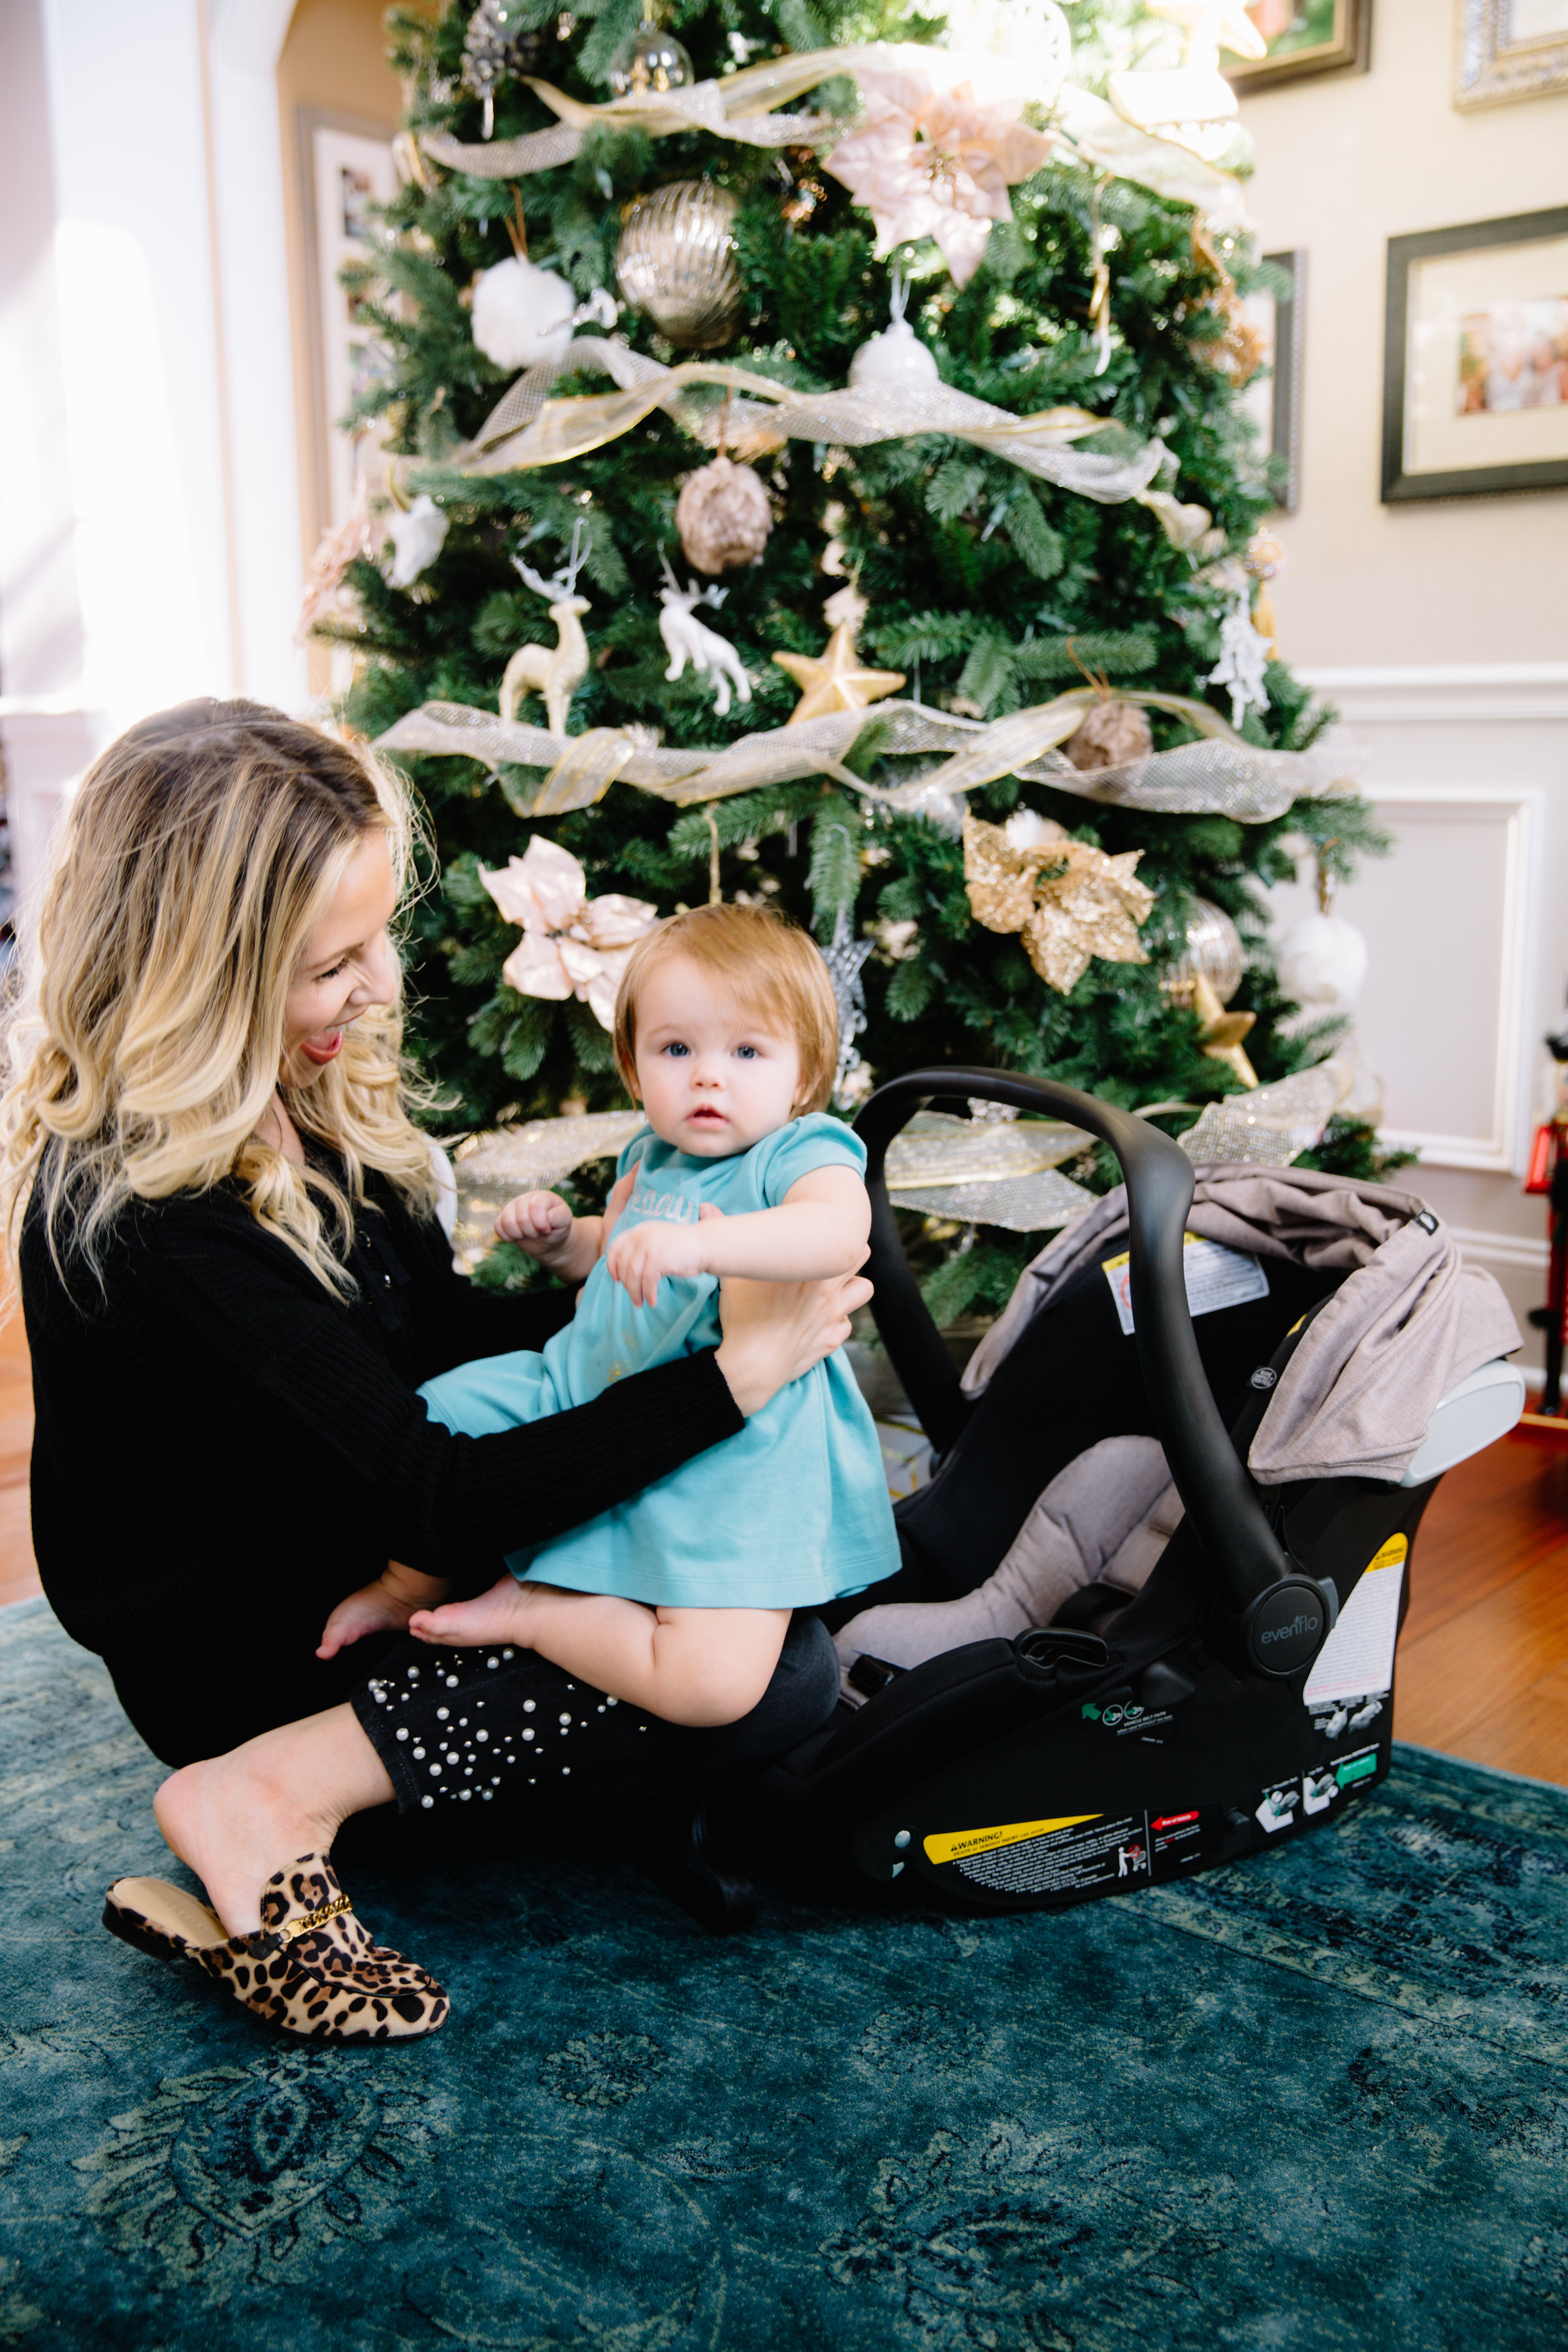 CHRISTMAS IN NASHVILLE: FAMILY EVENTS by popular Nashville blogger Nashville Wifestyles